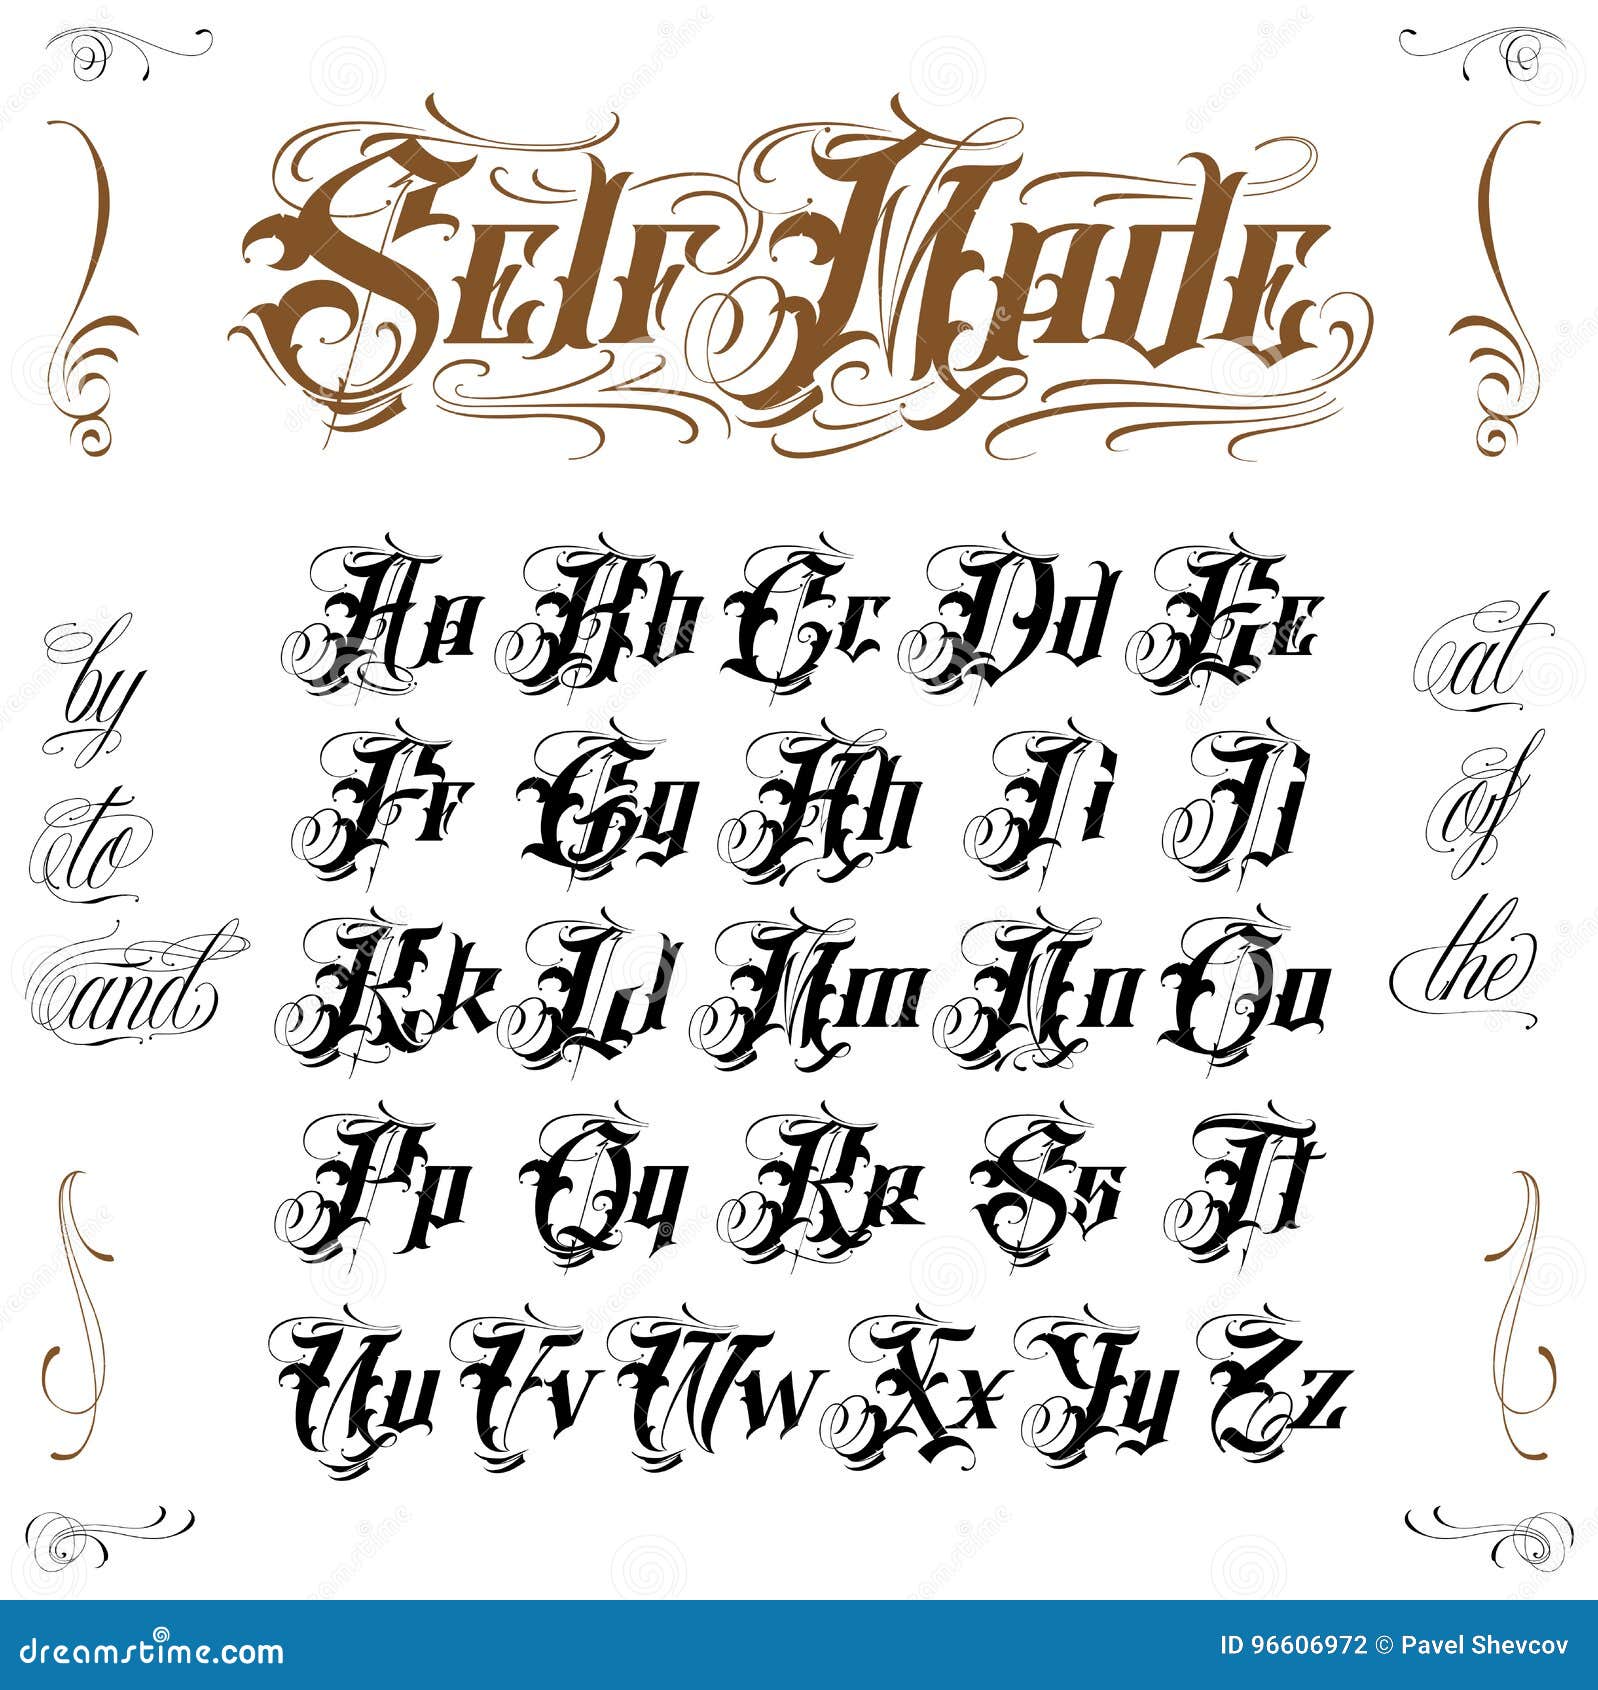 Gangster tattoo lettering stock vector. Illustration of cursive - 96606972